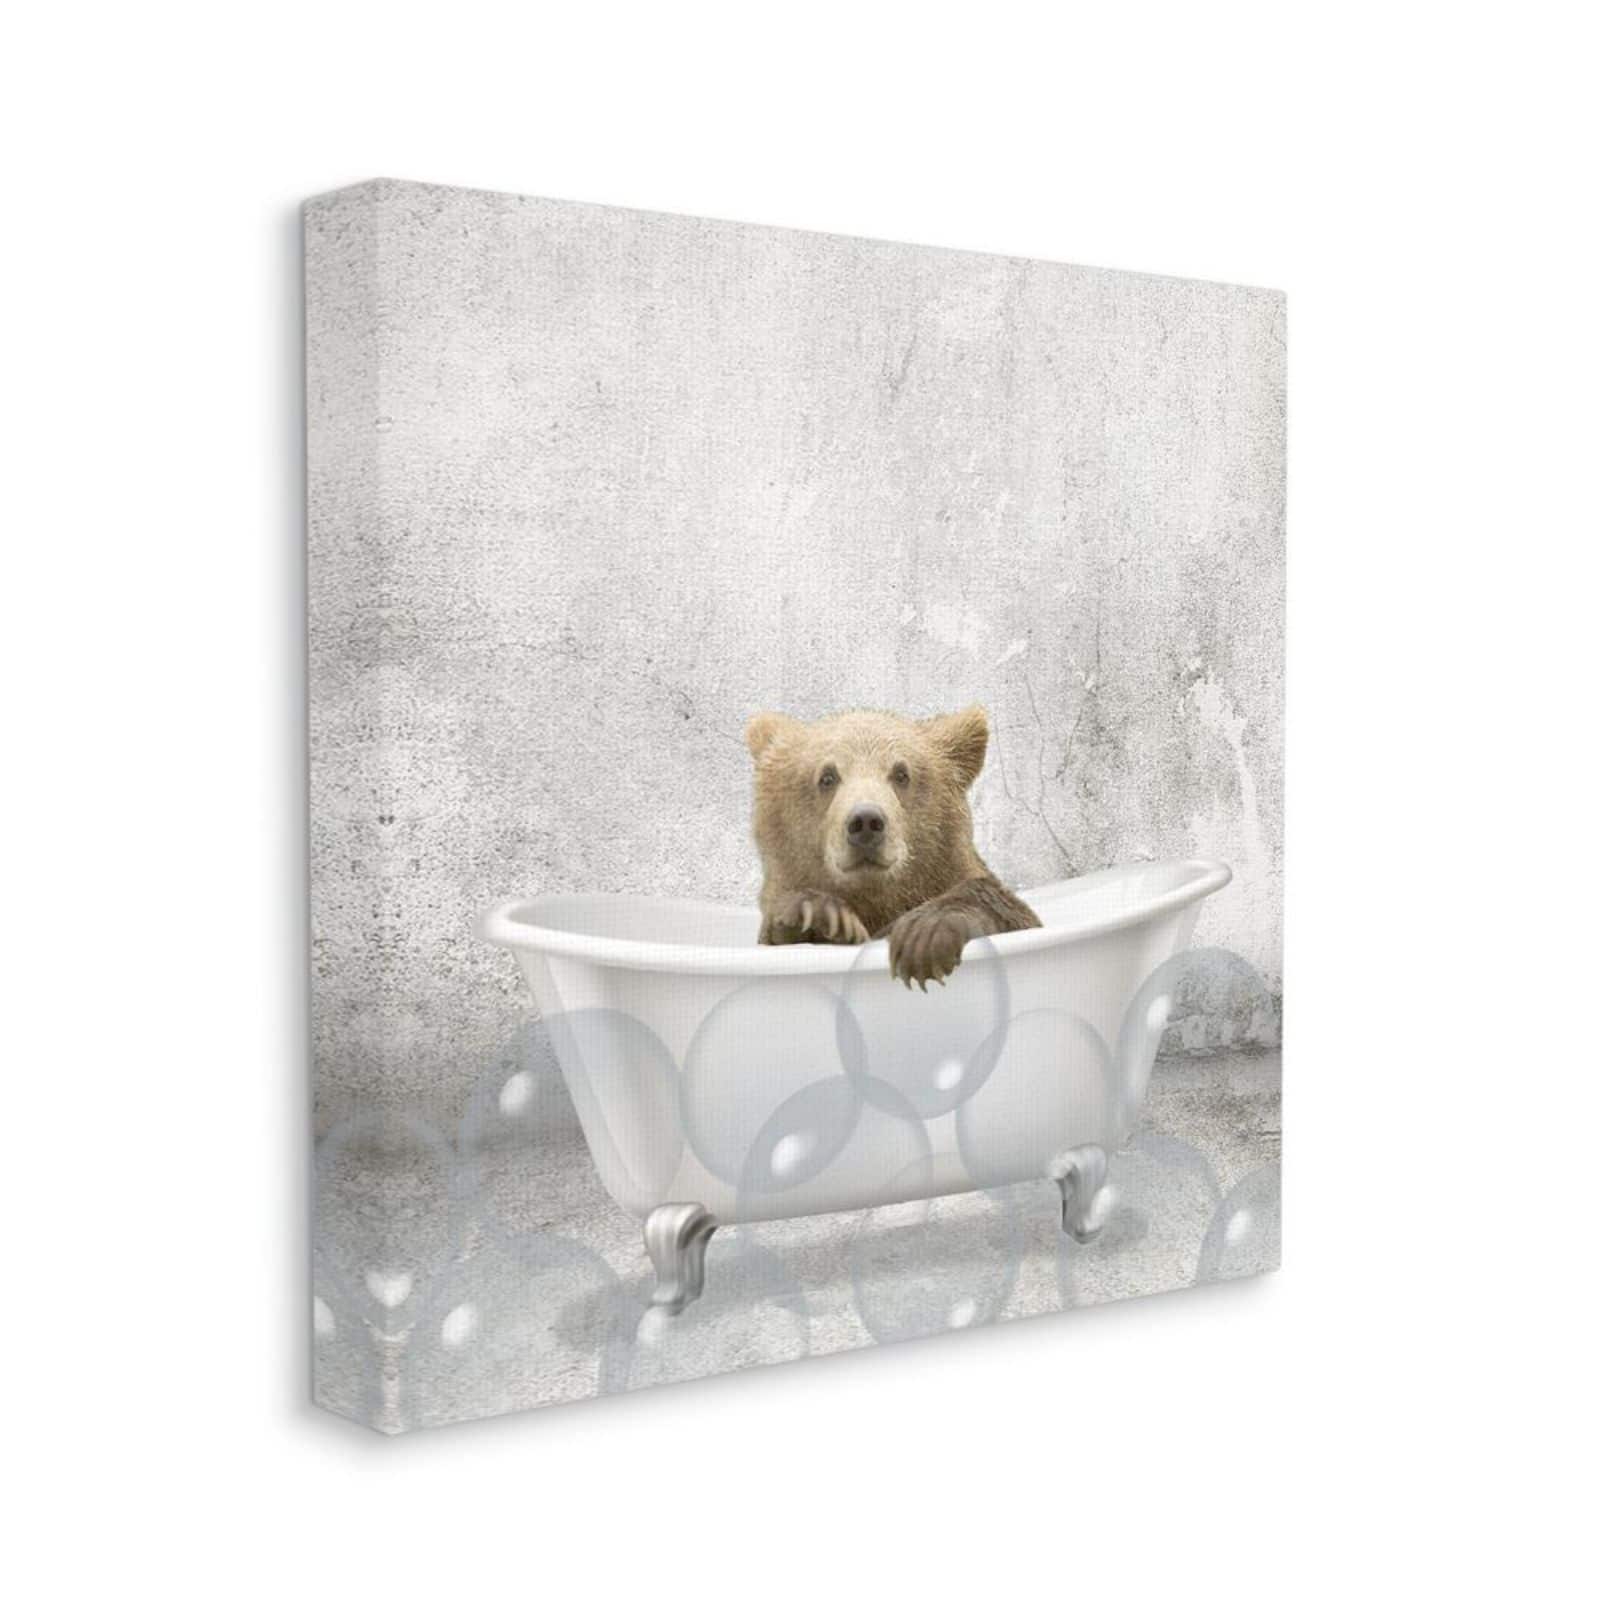 Stupell Industries Baby Bear Bath Time Cute Animal Canvas Wall Art